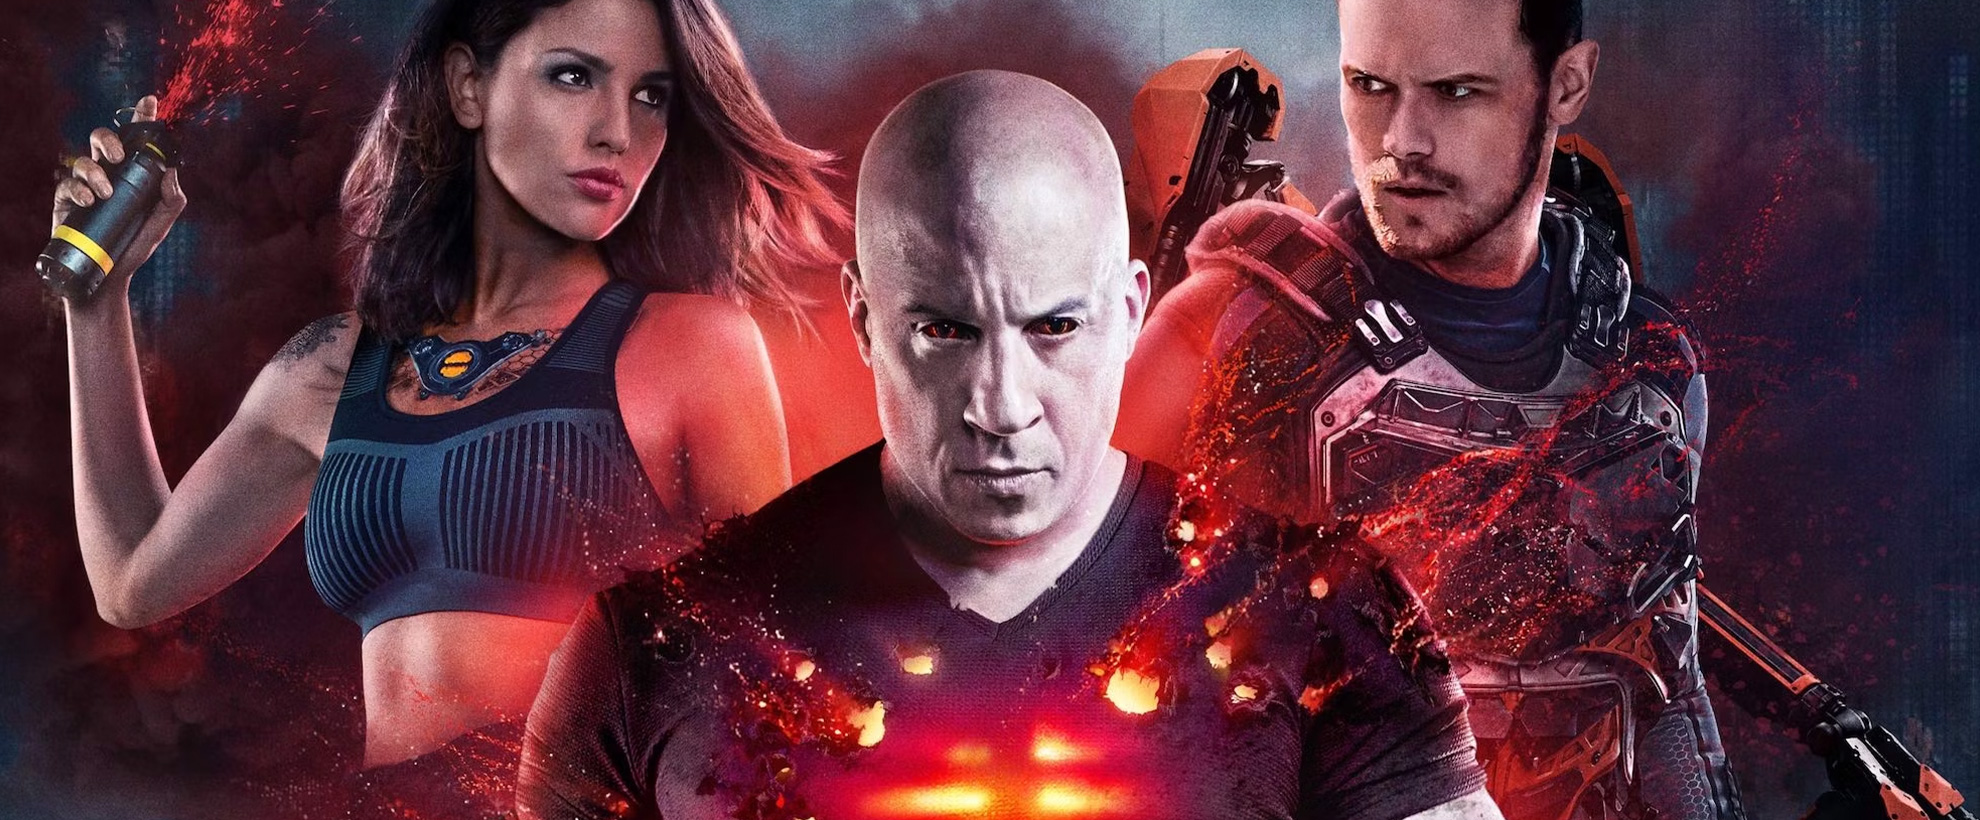 The cast of Bloodshot, starring Vin Diesel